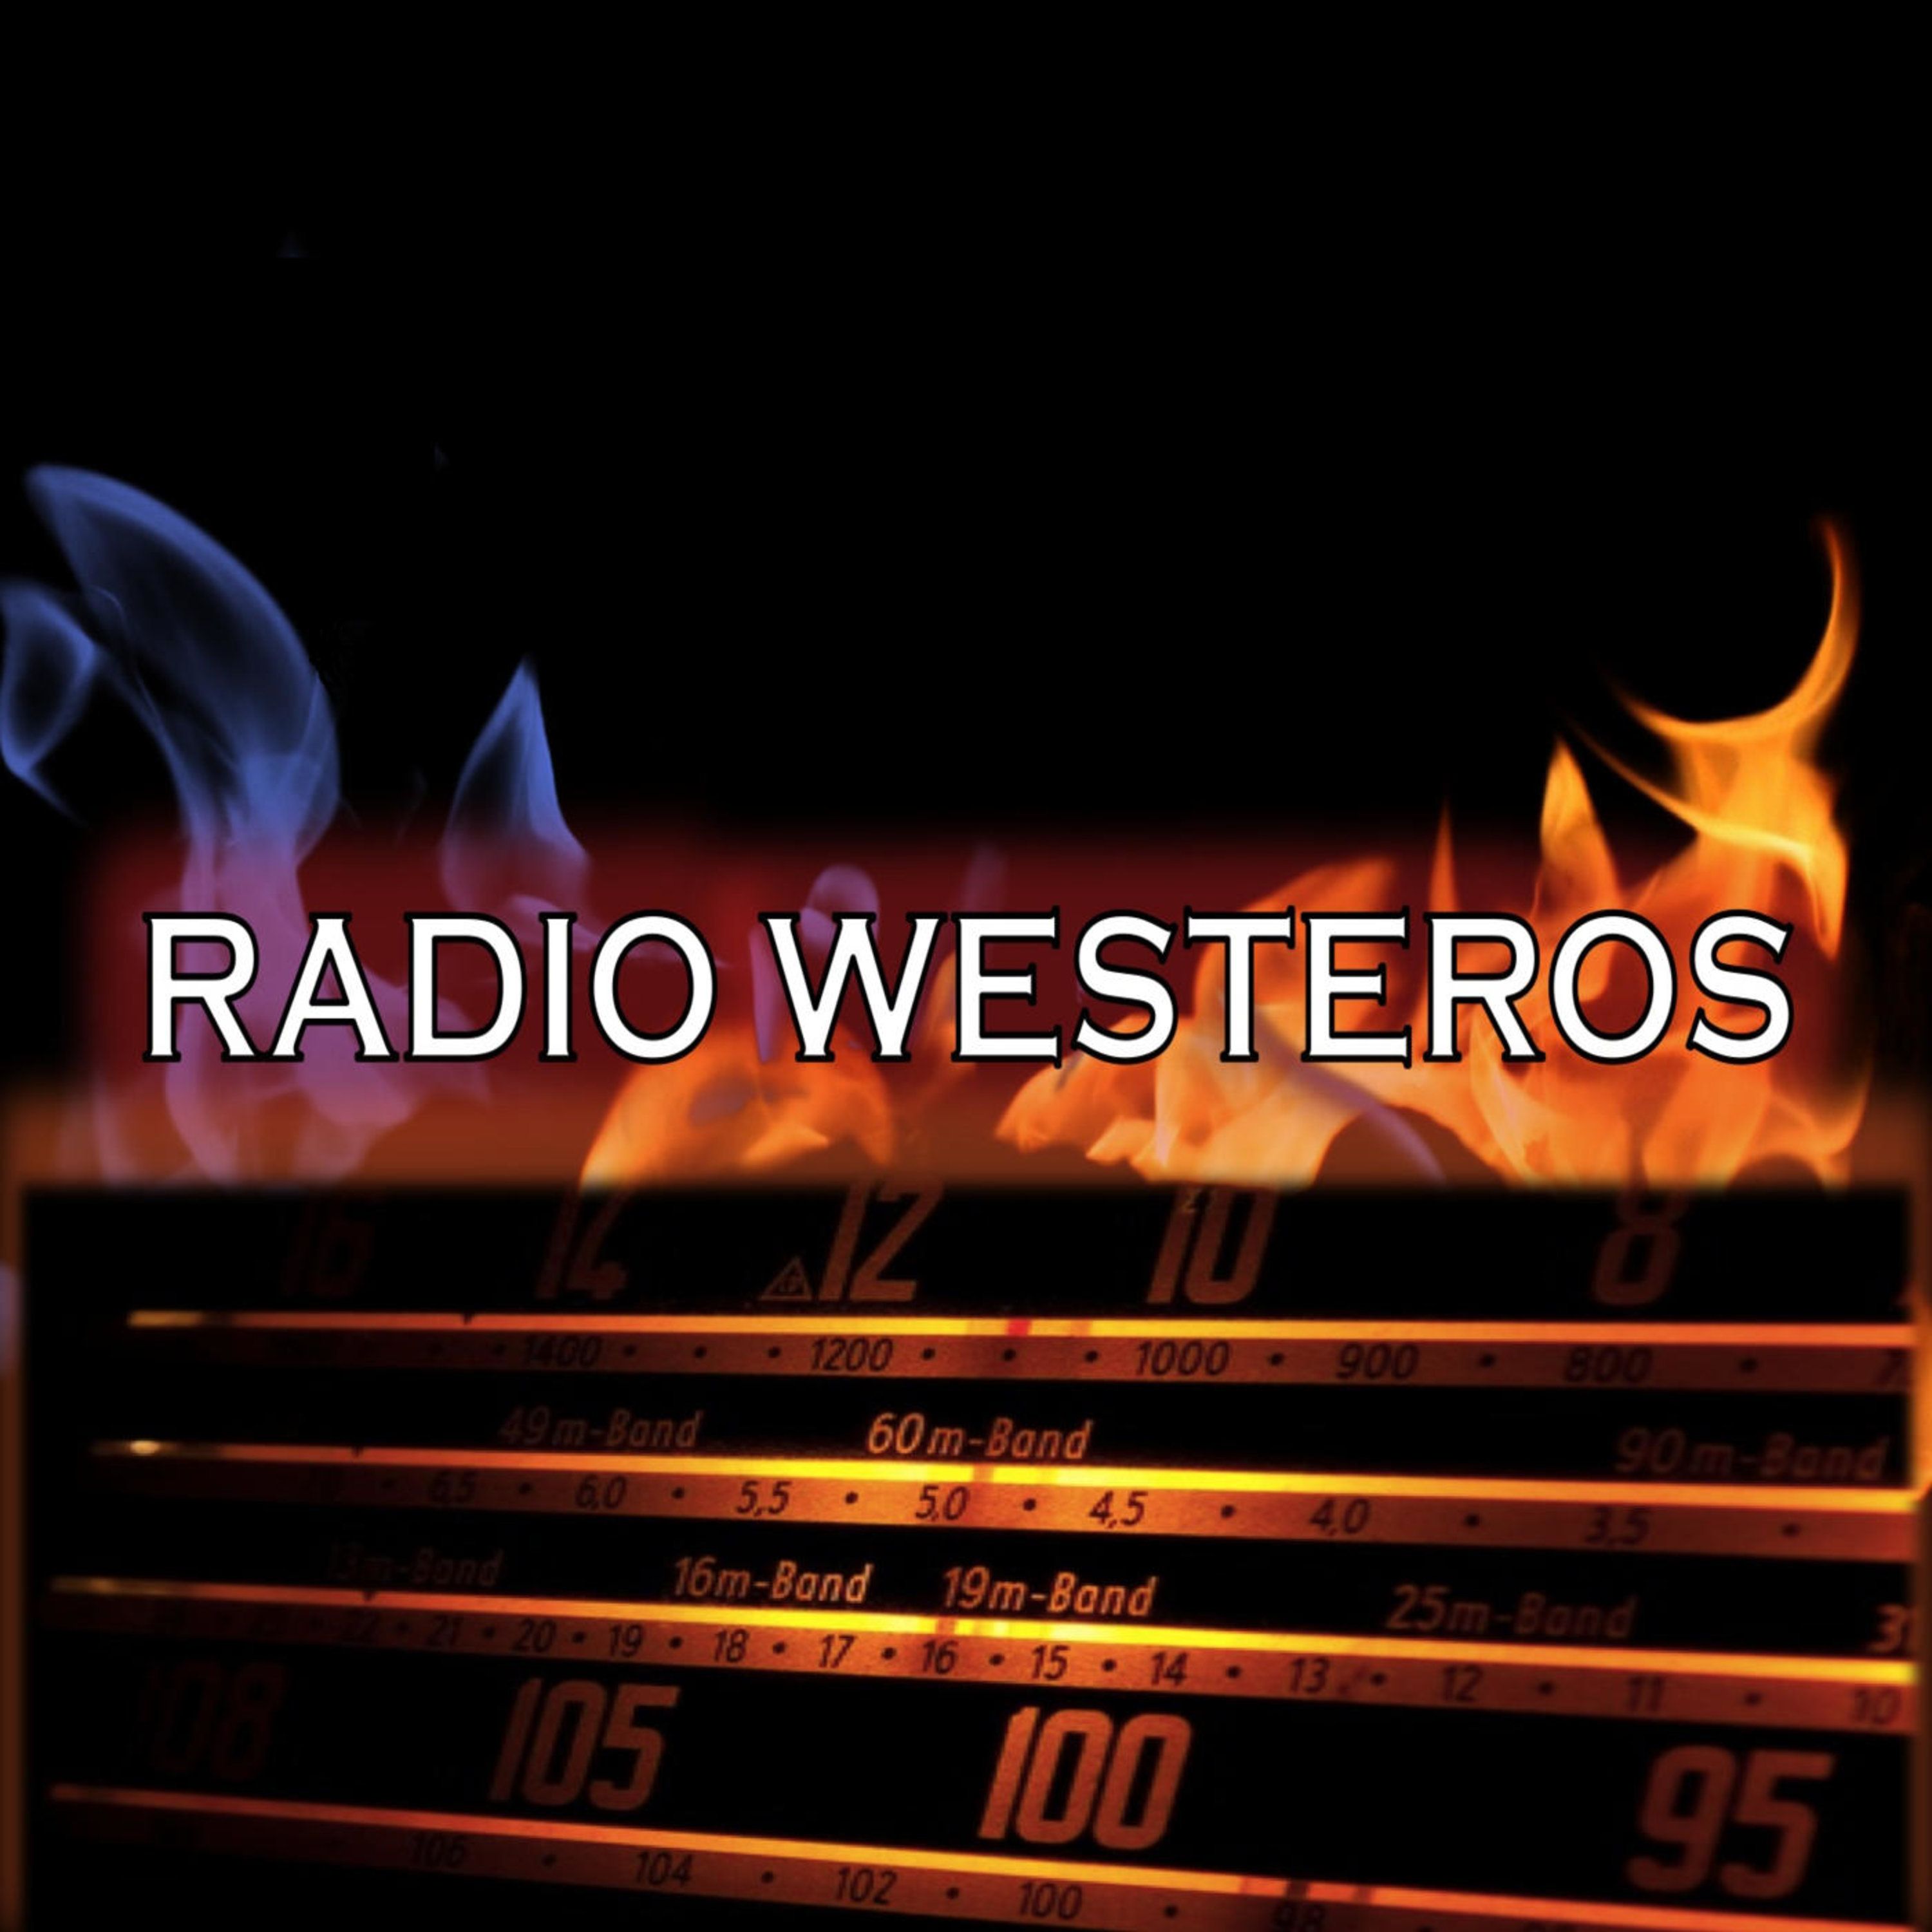 Radio Westeros E56 - TWoW Primer, part 3 - The Riverlands